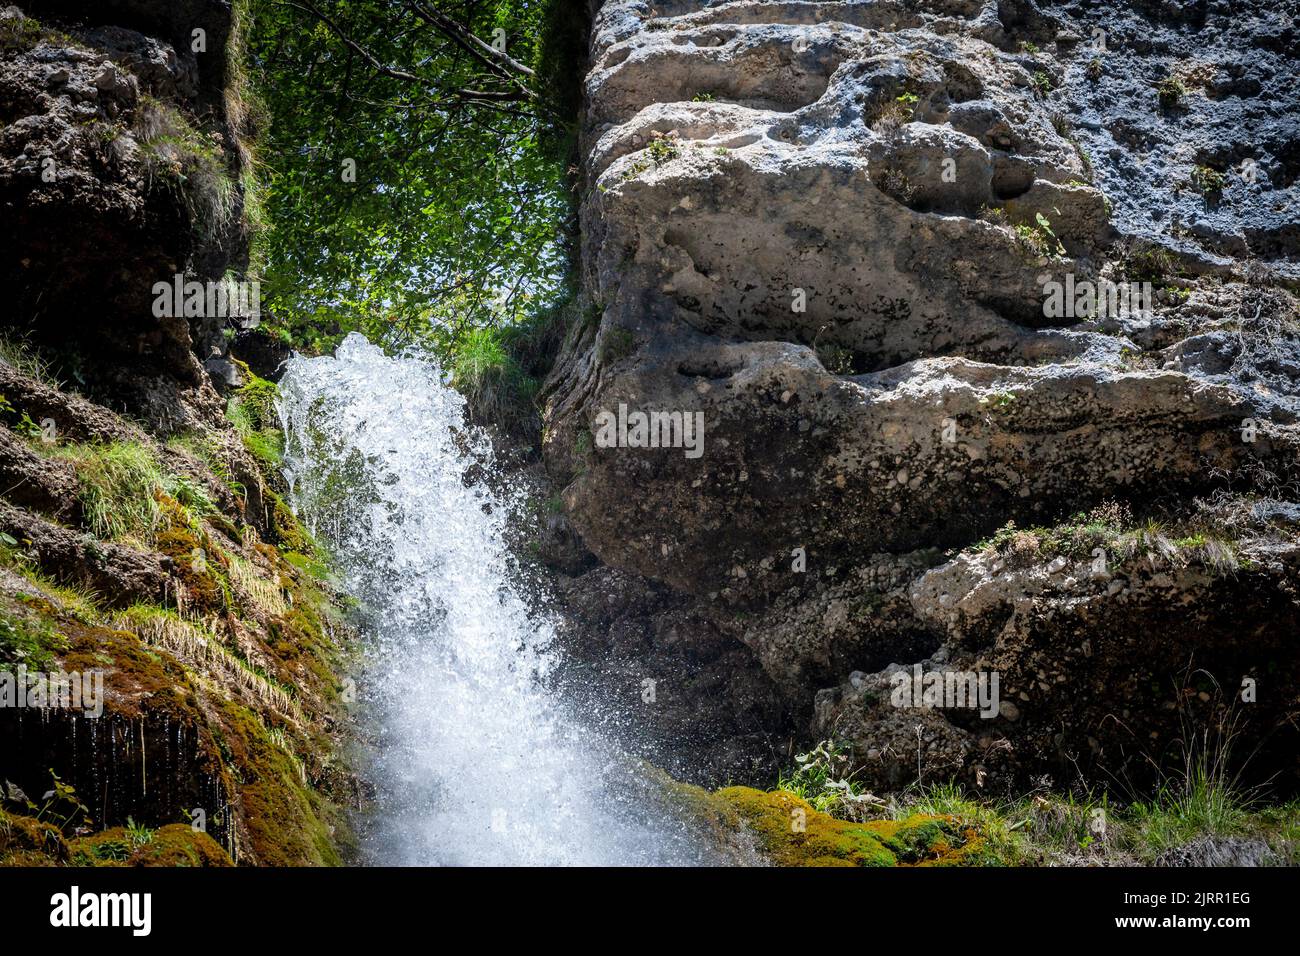 Picture of the Pericnik waterfalls. Peričnik Falls, orslap Peričnik is a waterfall in Triglav National Park, Slovenia. Pericnik Falls is one of the be Stock Photo